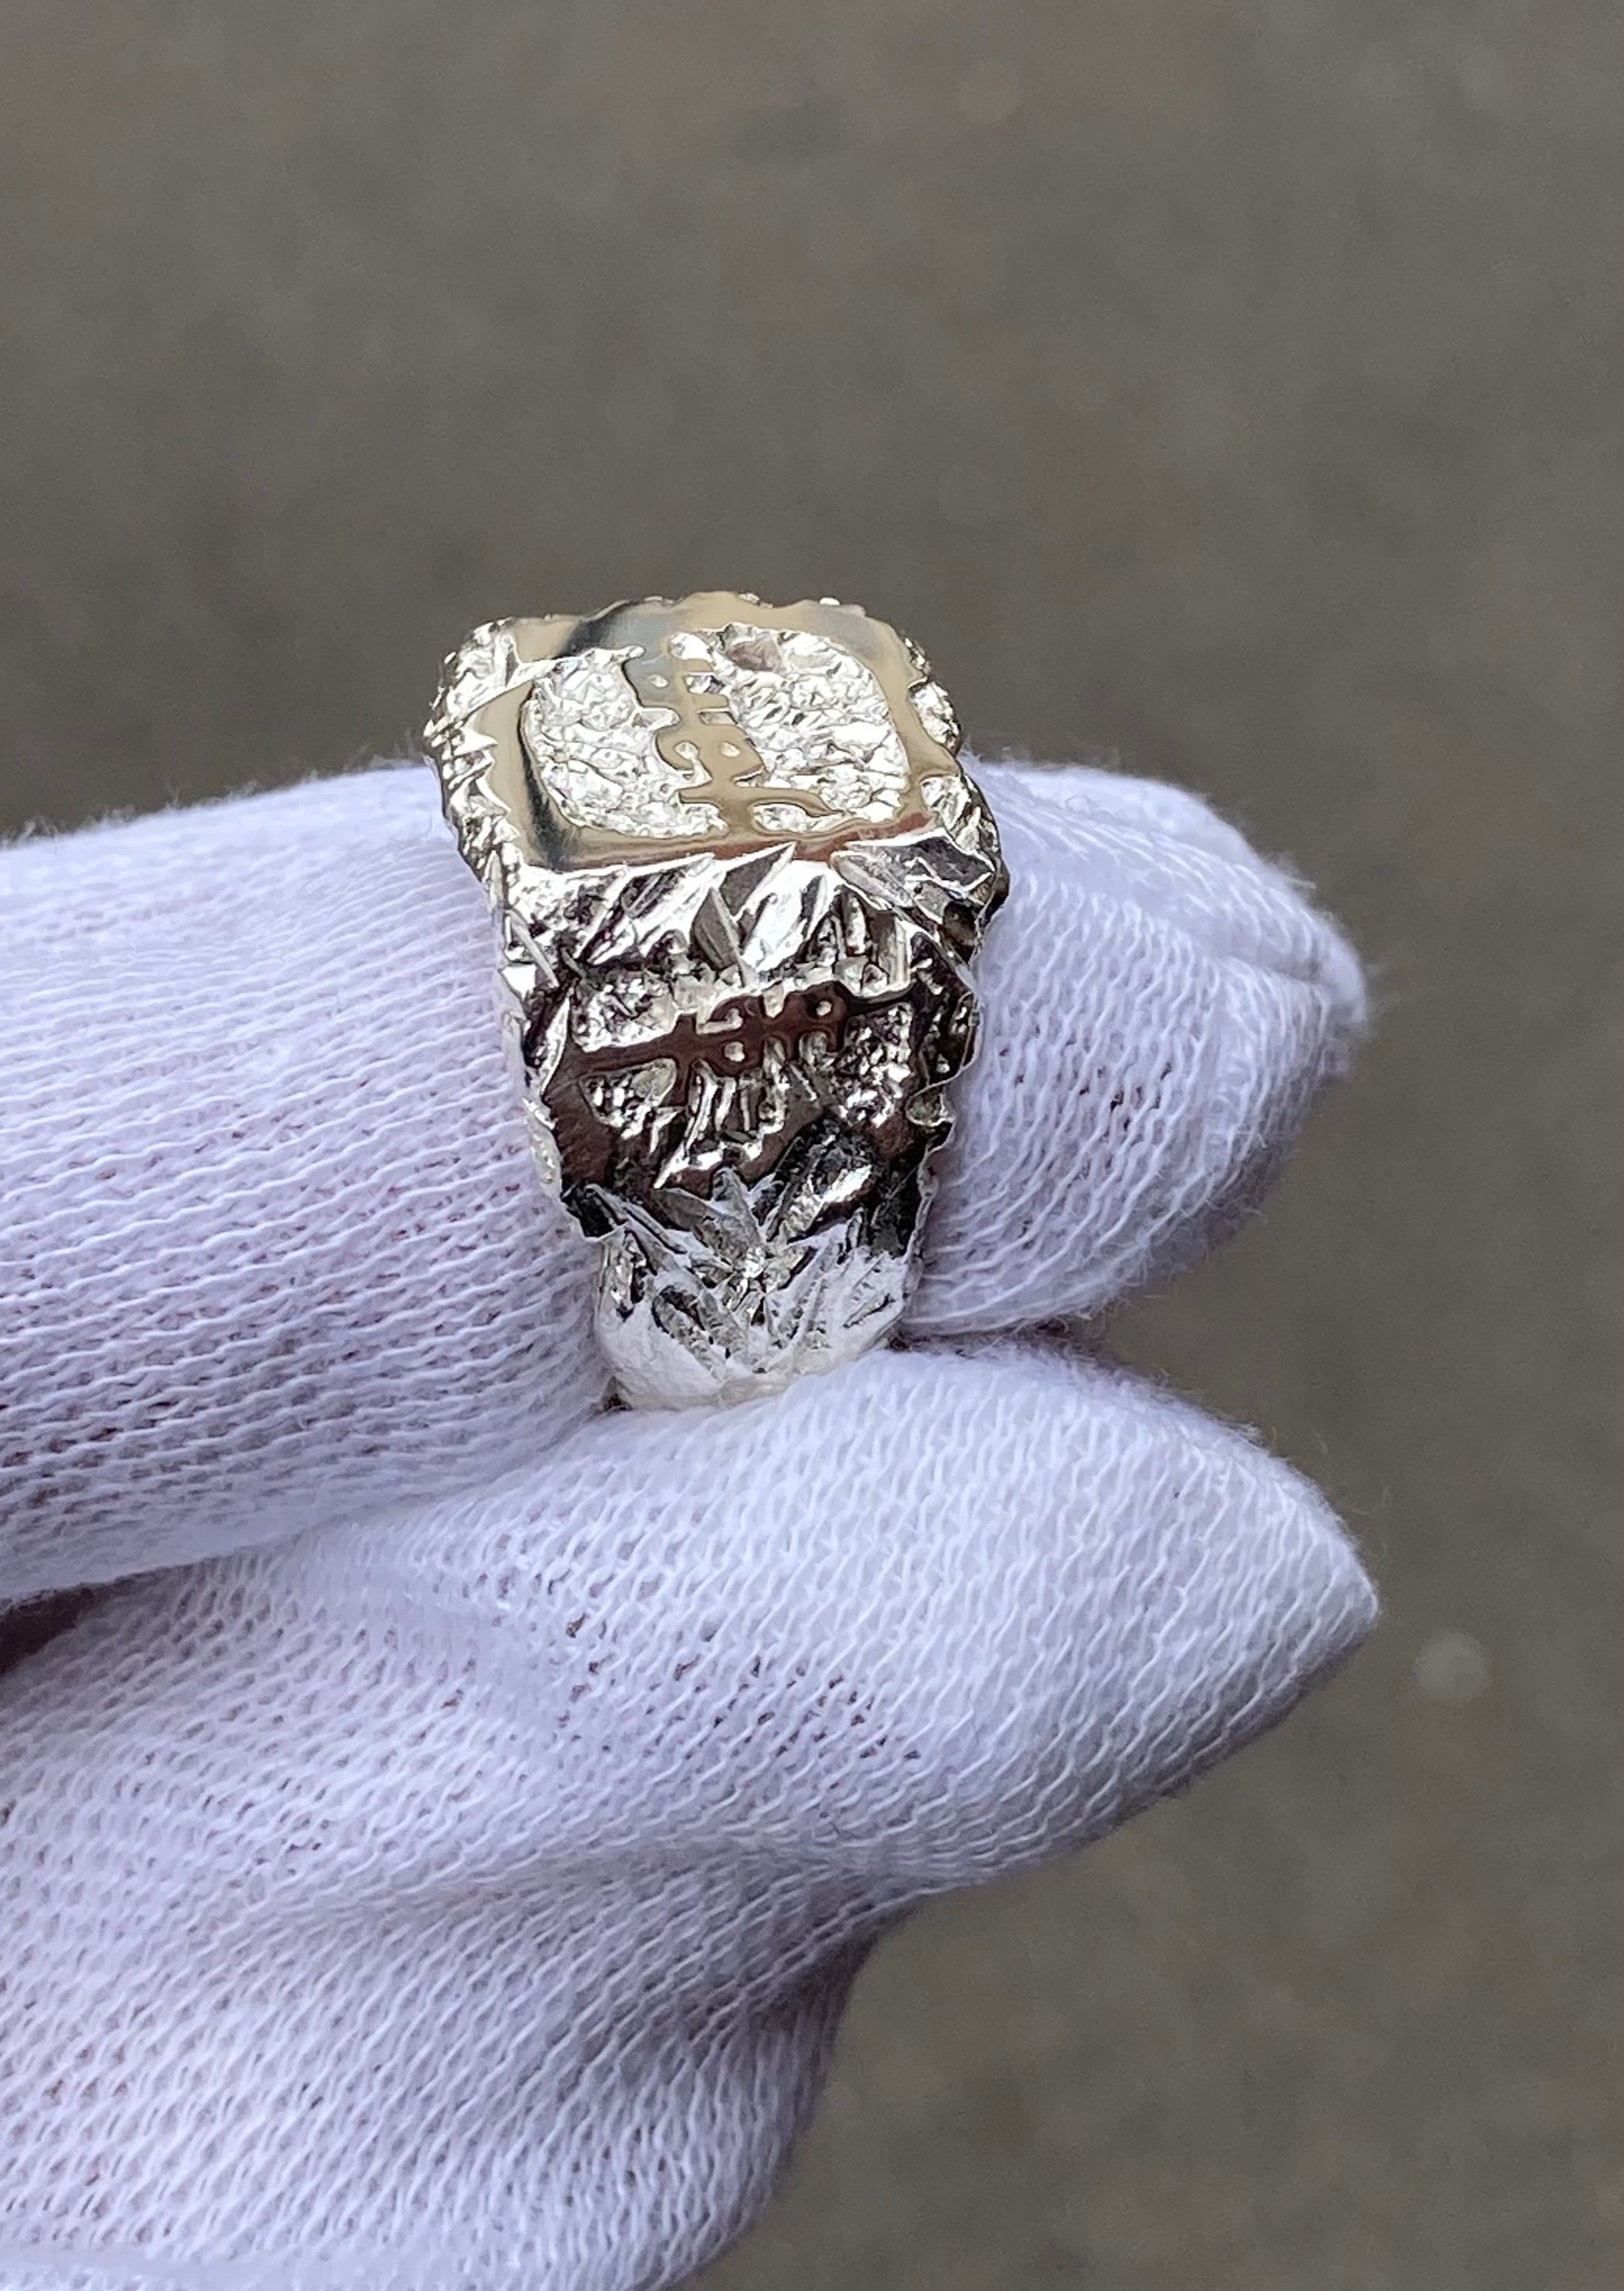 Jan Černý Trophy Ring stříbro (925/1000)